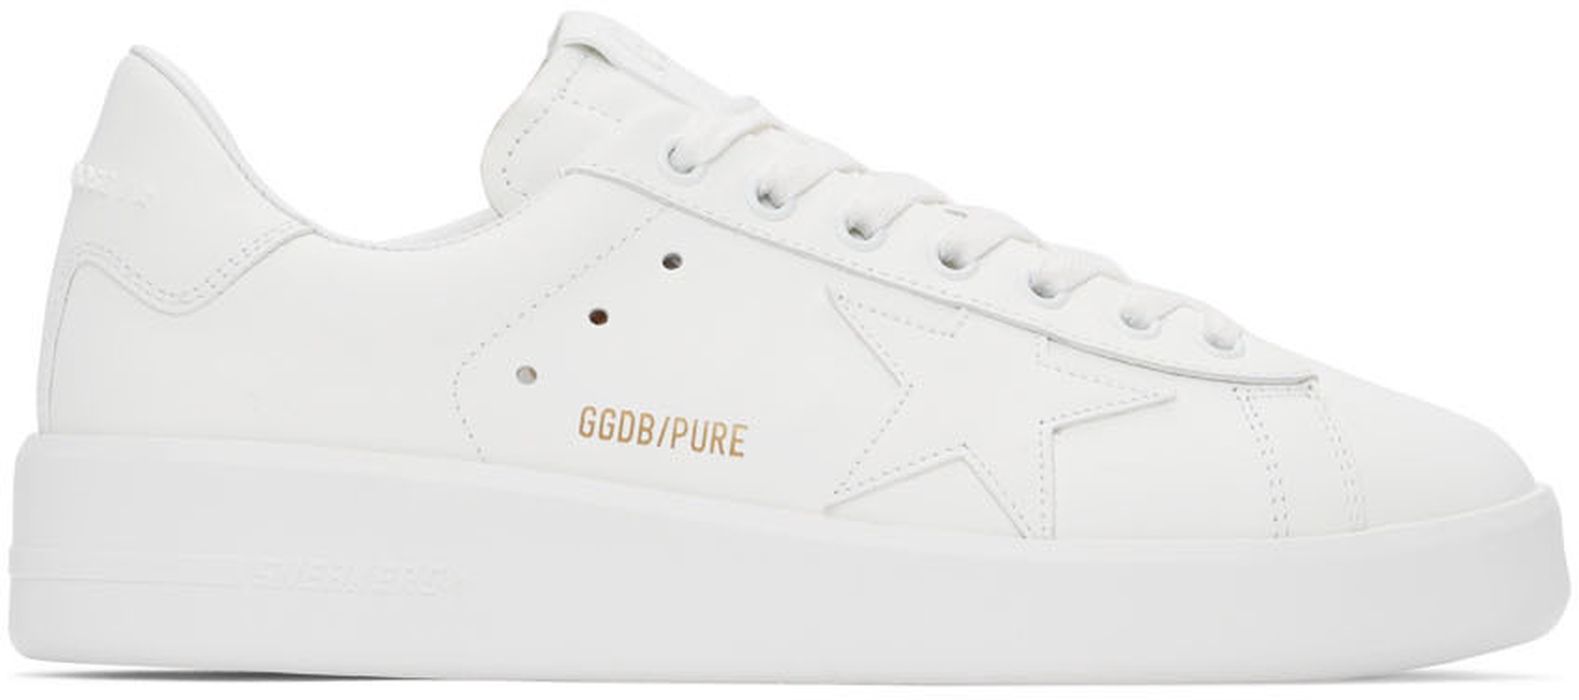 Golden Goose White Purestar Sneakers